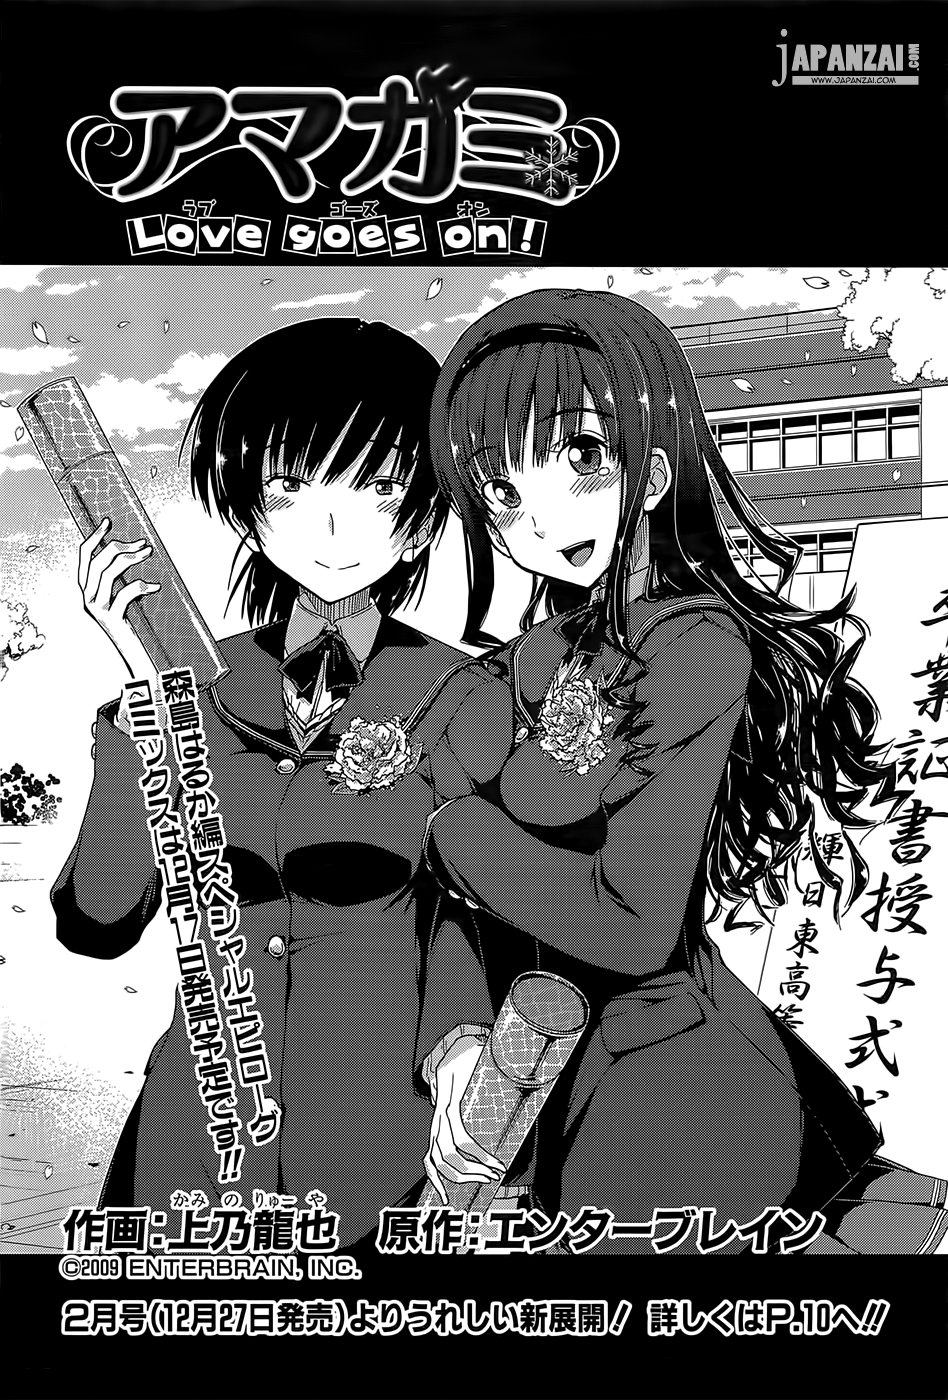 Amagami - Love Goes On! Vol.2 Chapter 10.5: Morishima Haruka - Extra - Picture 2